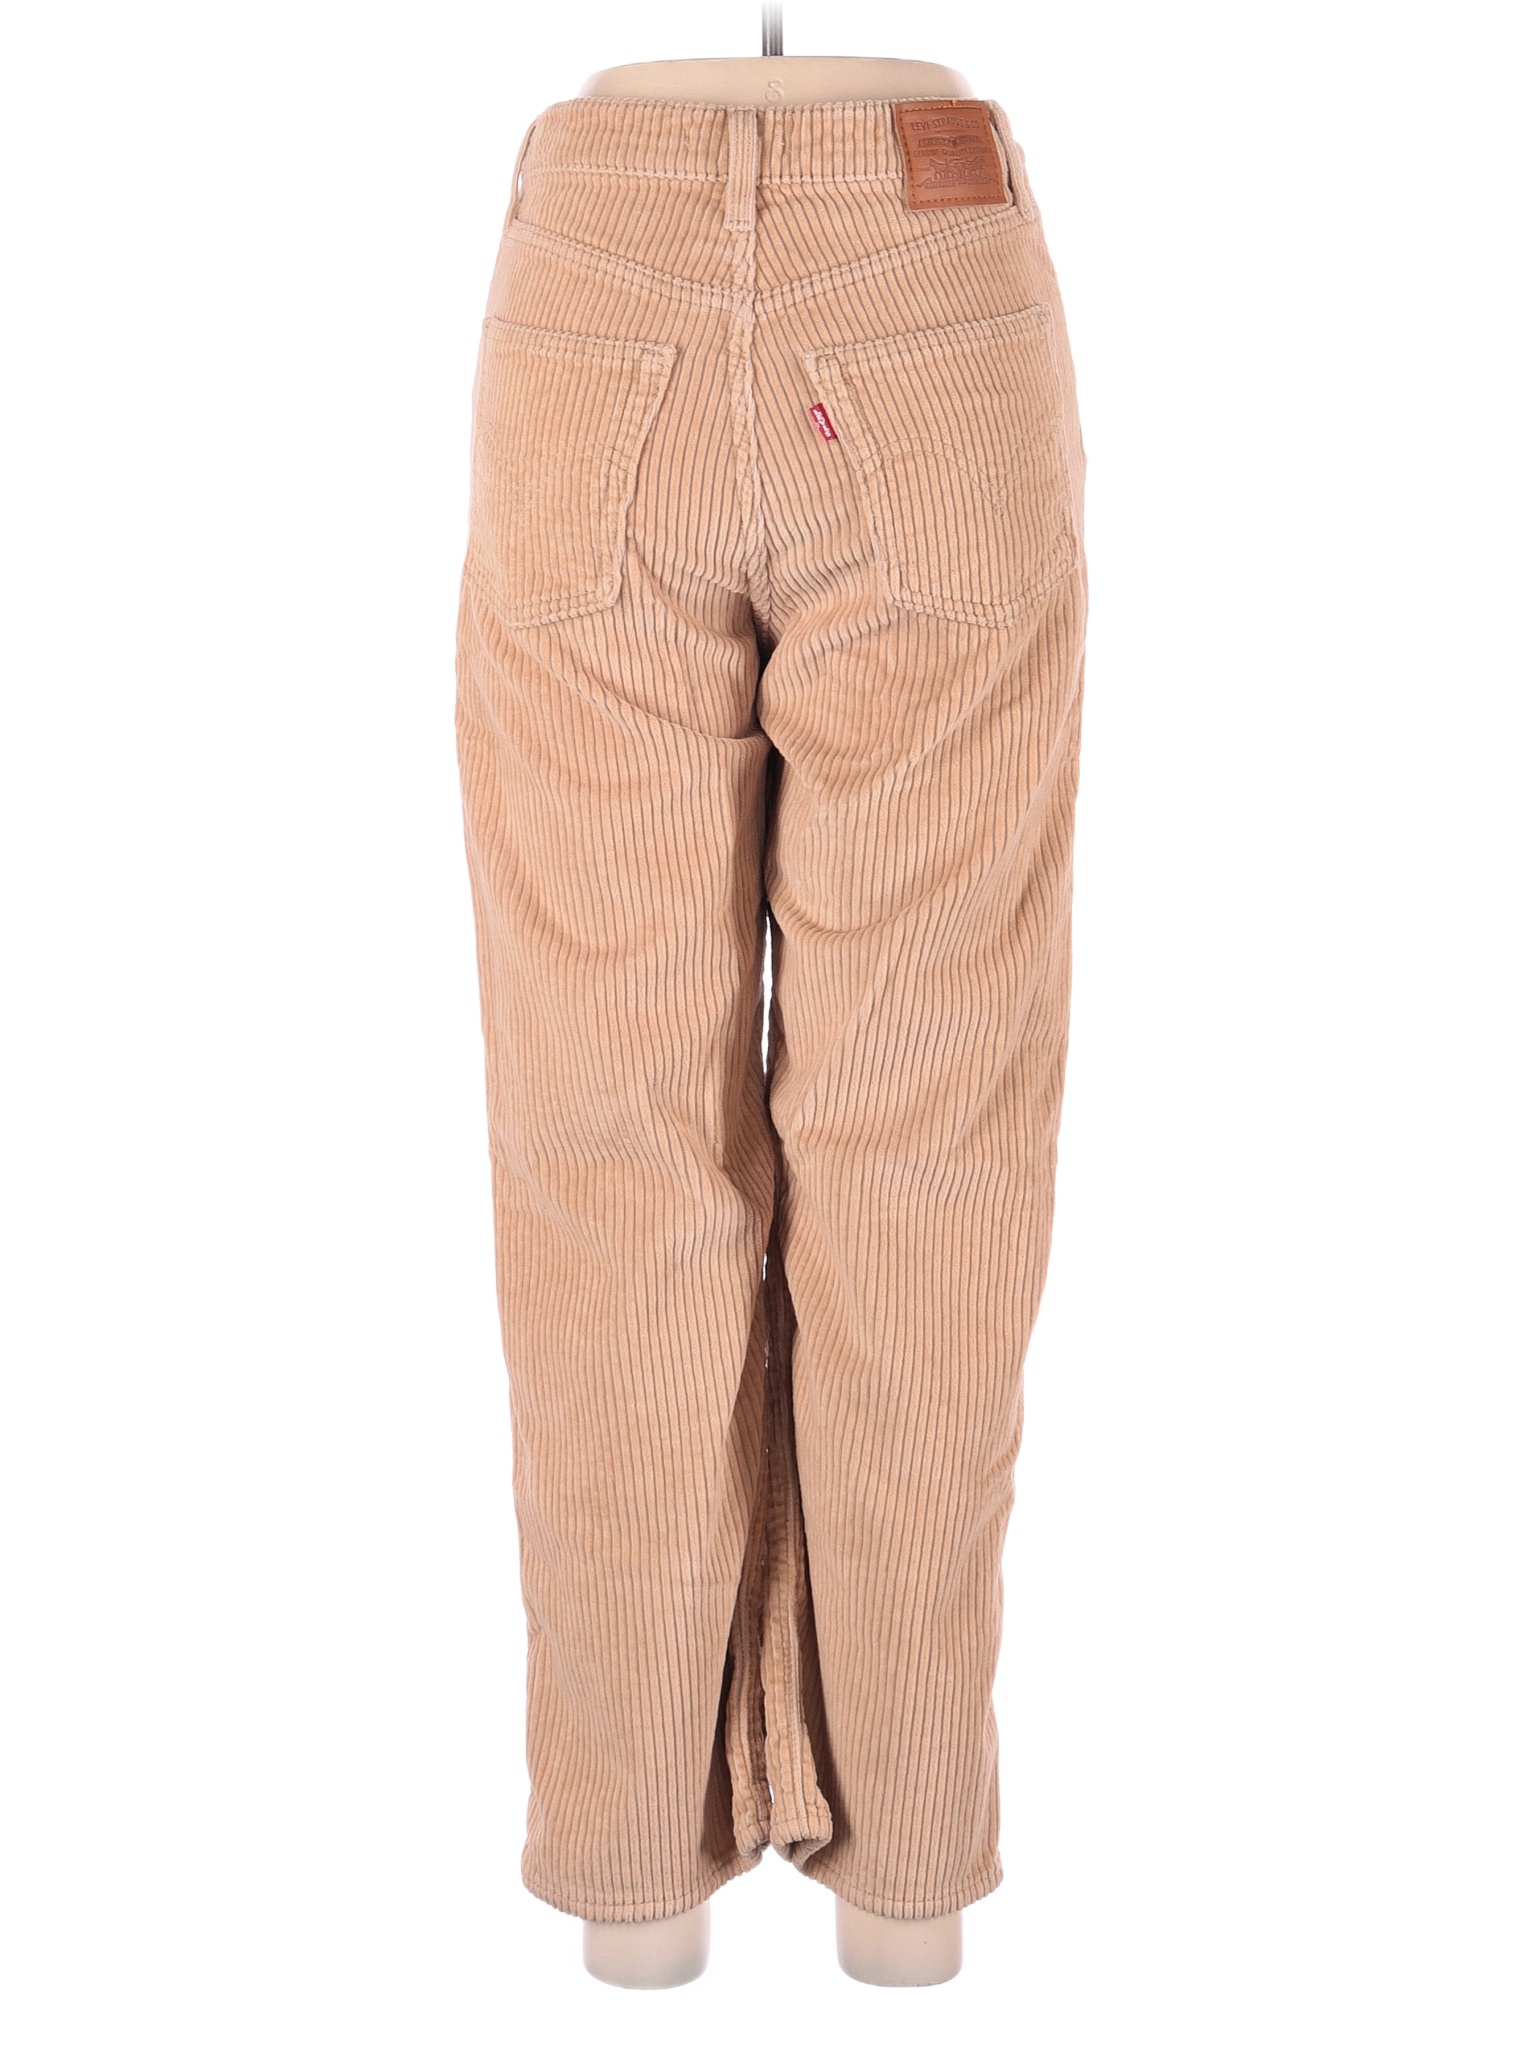 Ribcage Bootcut Corduroy Women's Pants - Red | Levi's® US